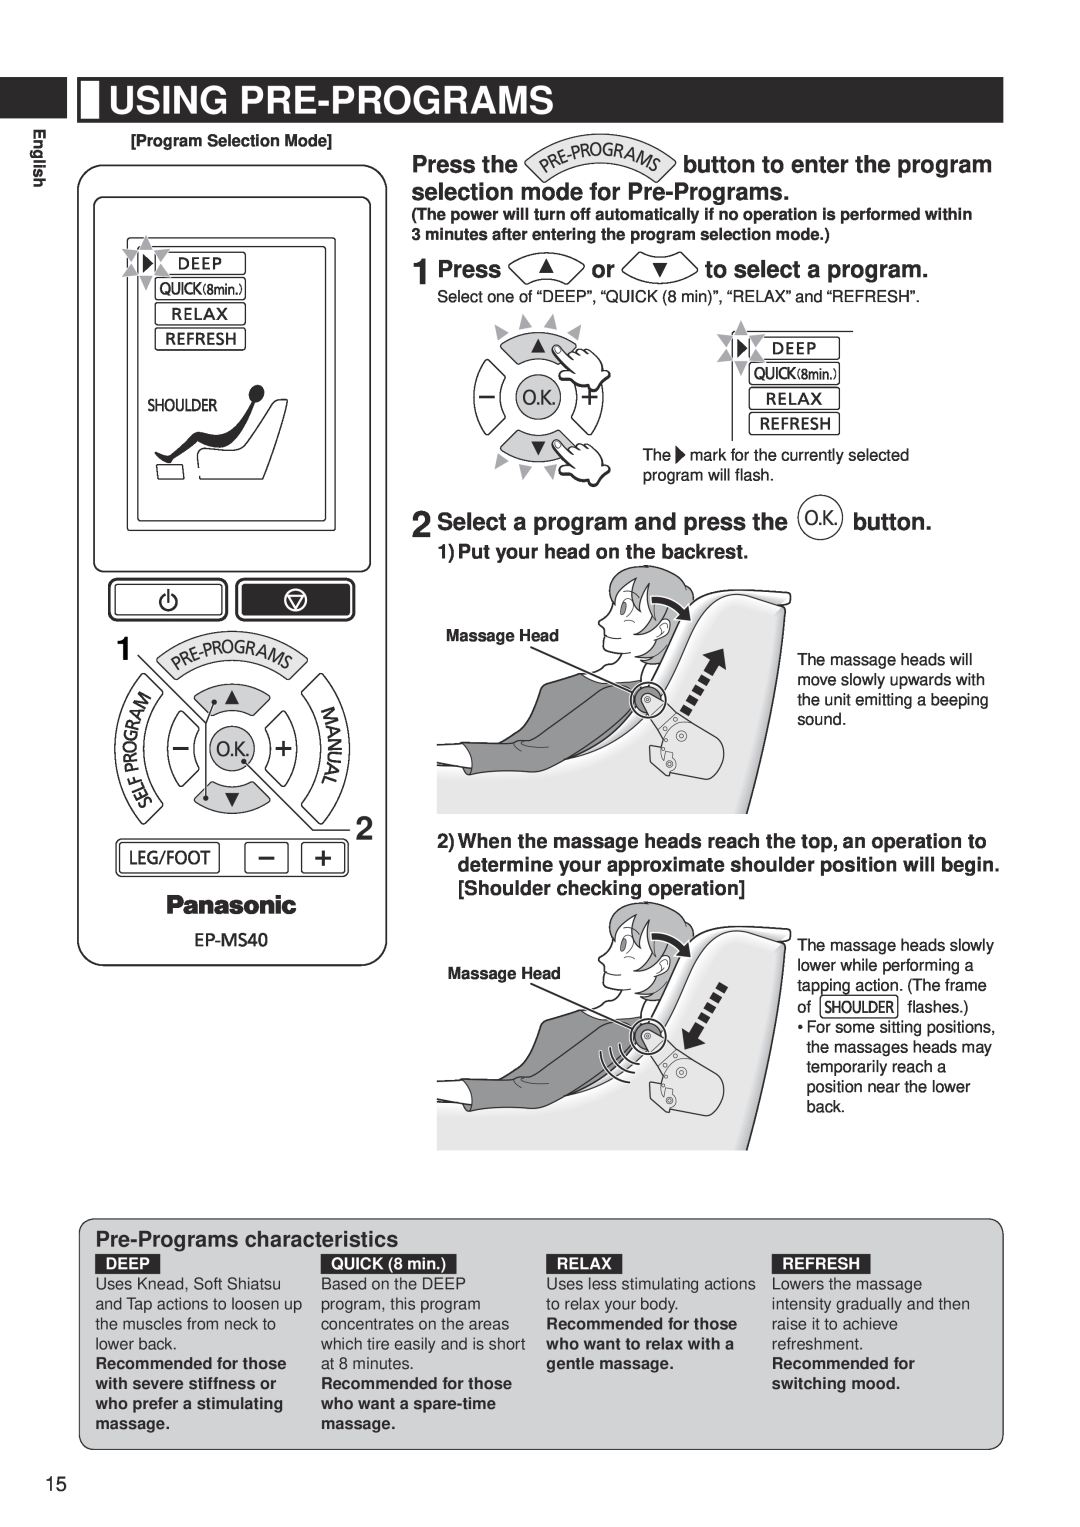 Panasonic EP-MS40 manual Using Pre-Programs, Press or to select a program, Pre-Programs characteristics 